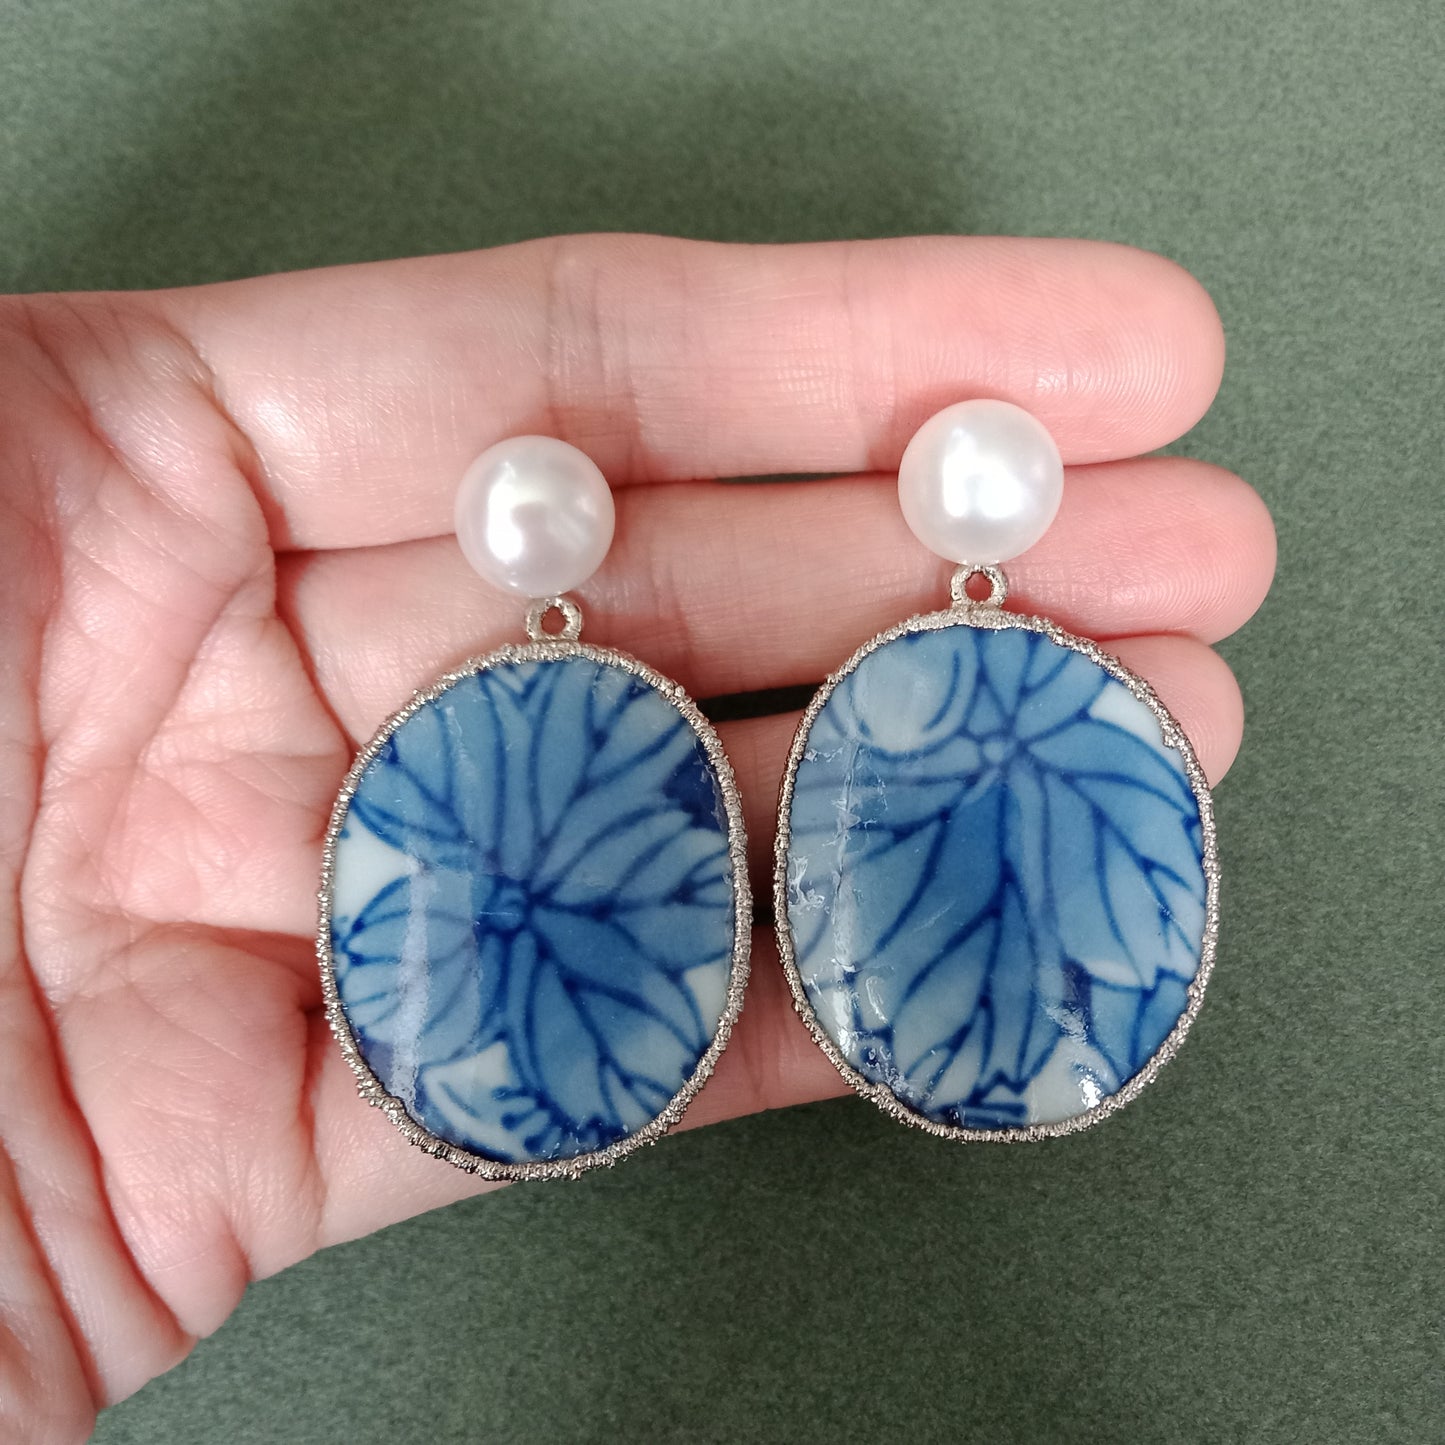 Blue and white palmate leaf porcelain earrings